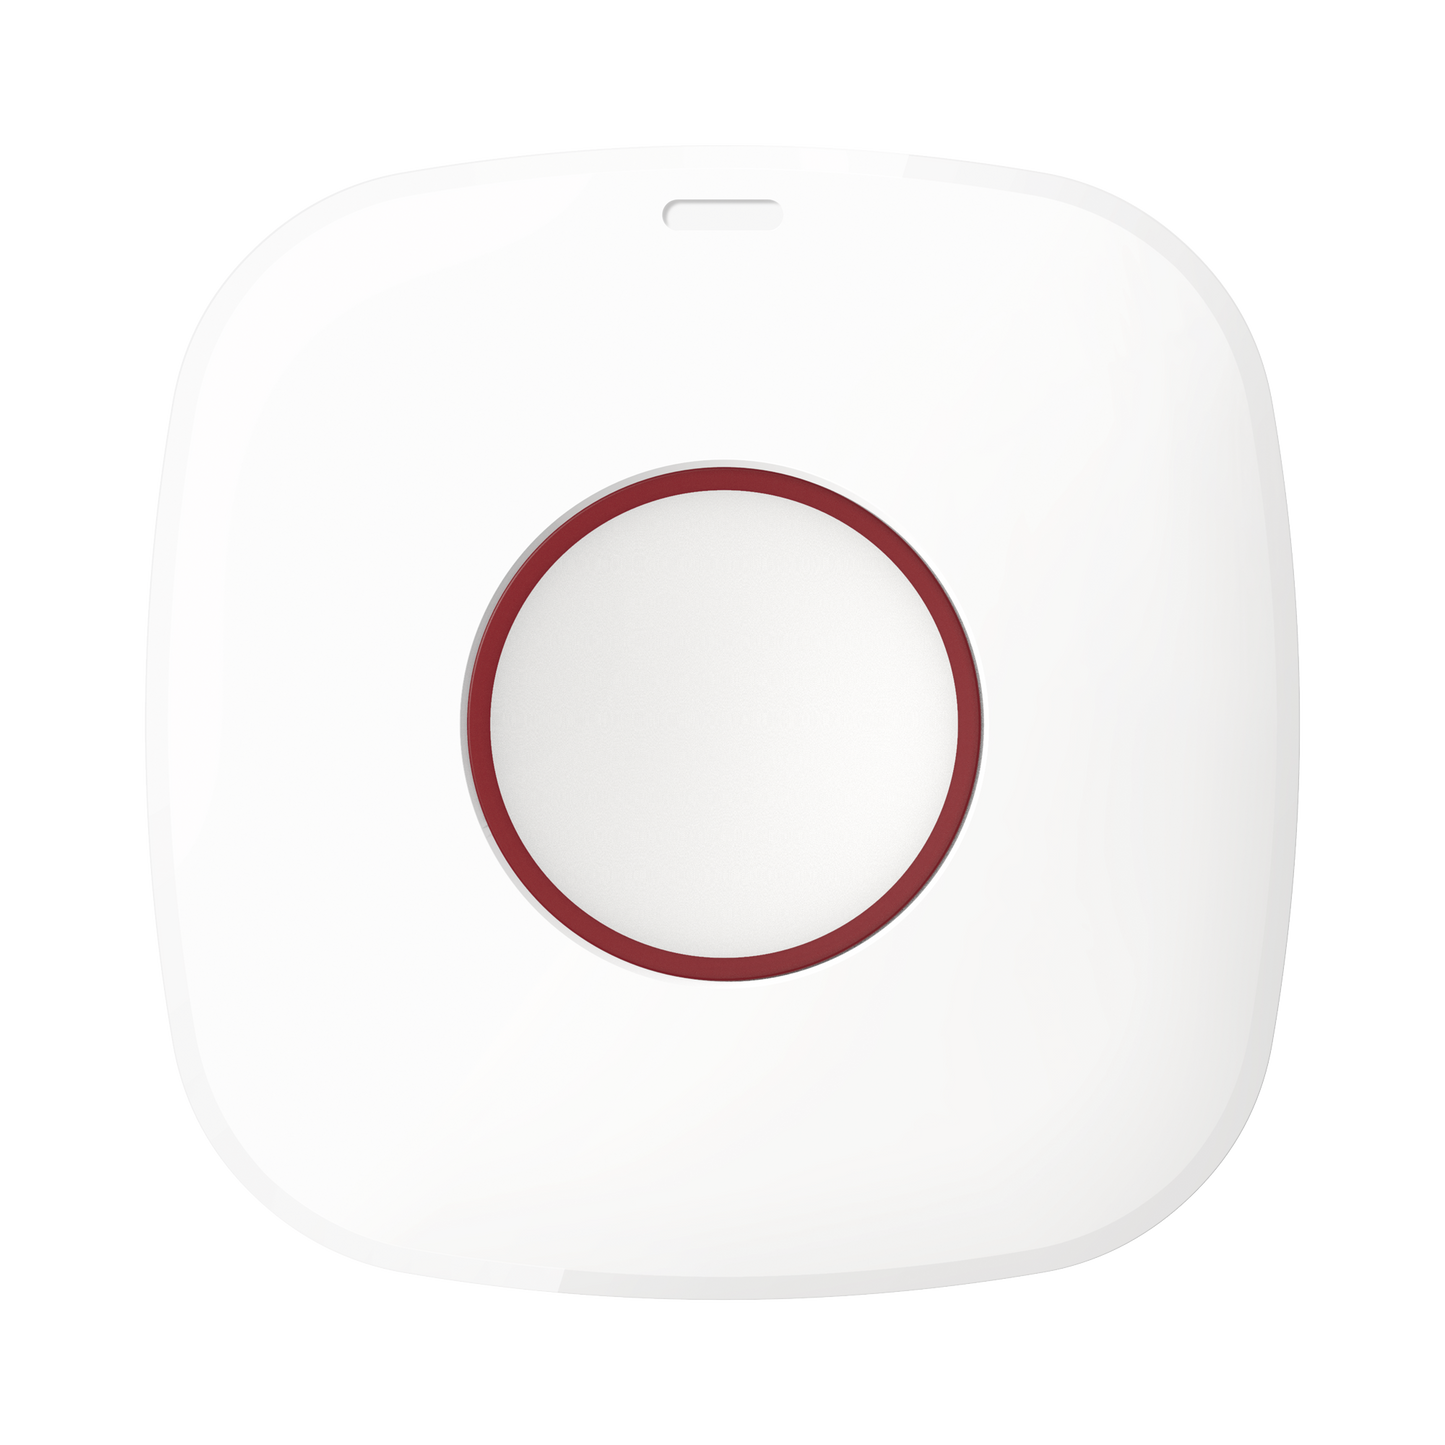 (epcom AX) Wireless Panic Button / Indoor / LED Indicator